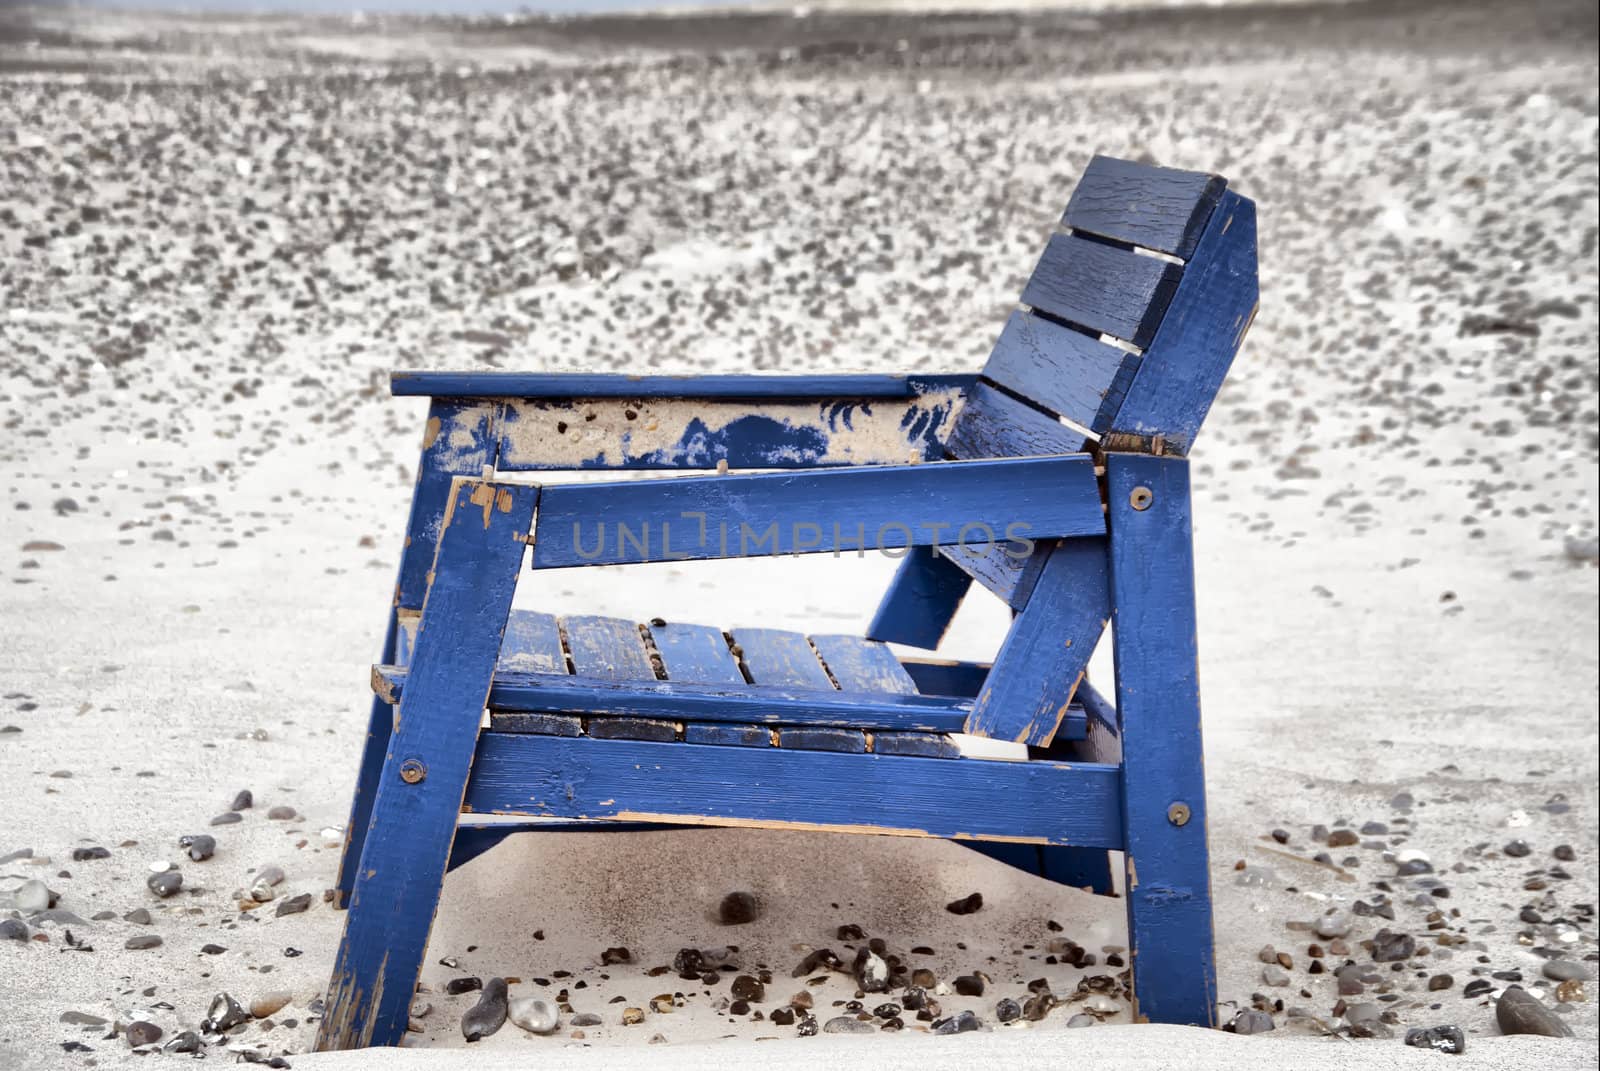 A stranded chair on the beach in denmark